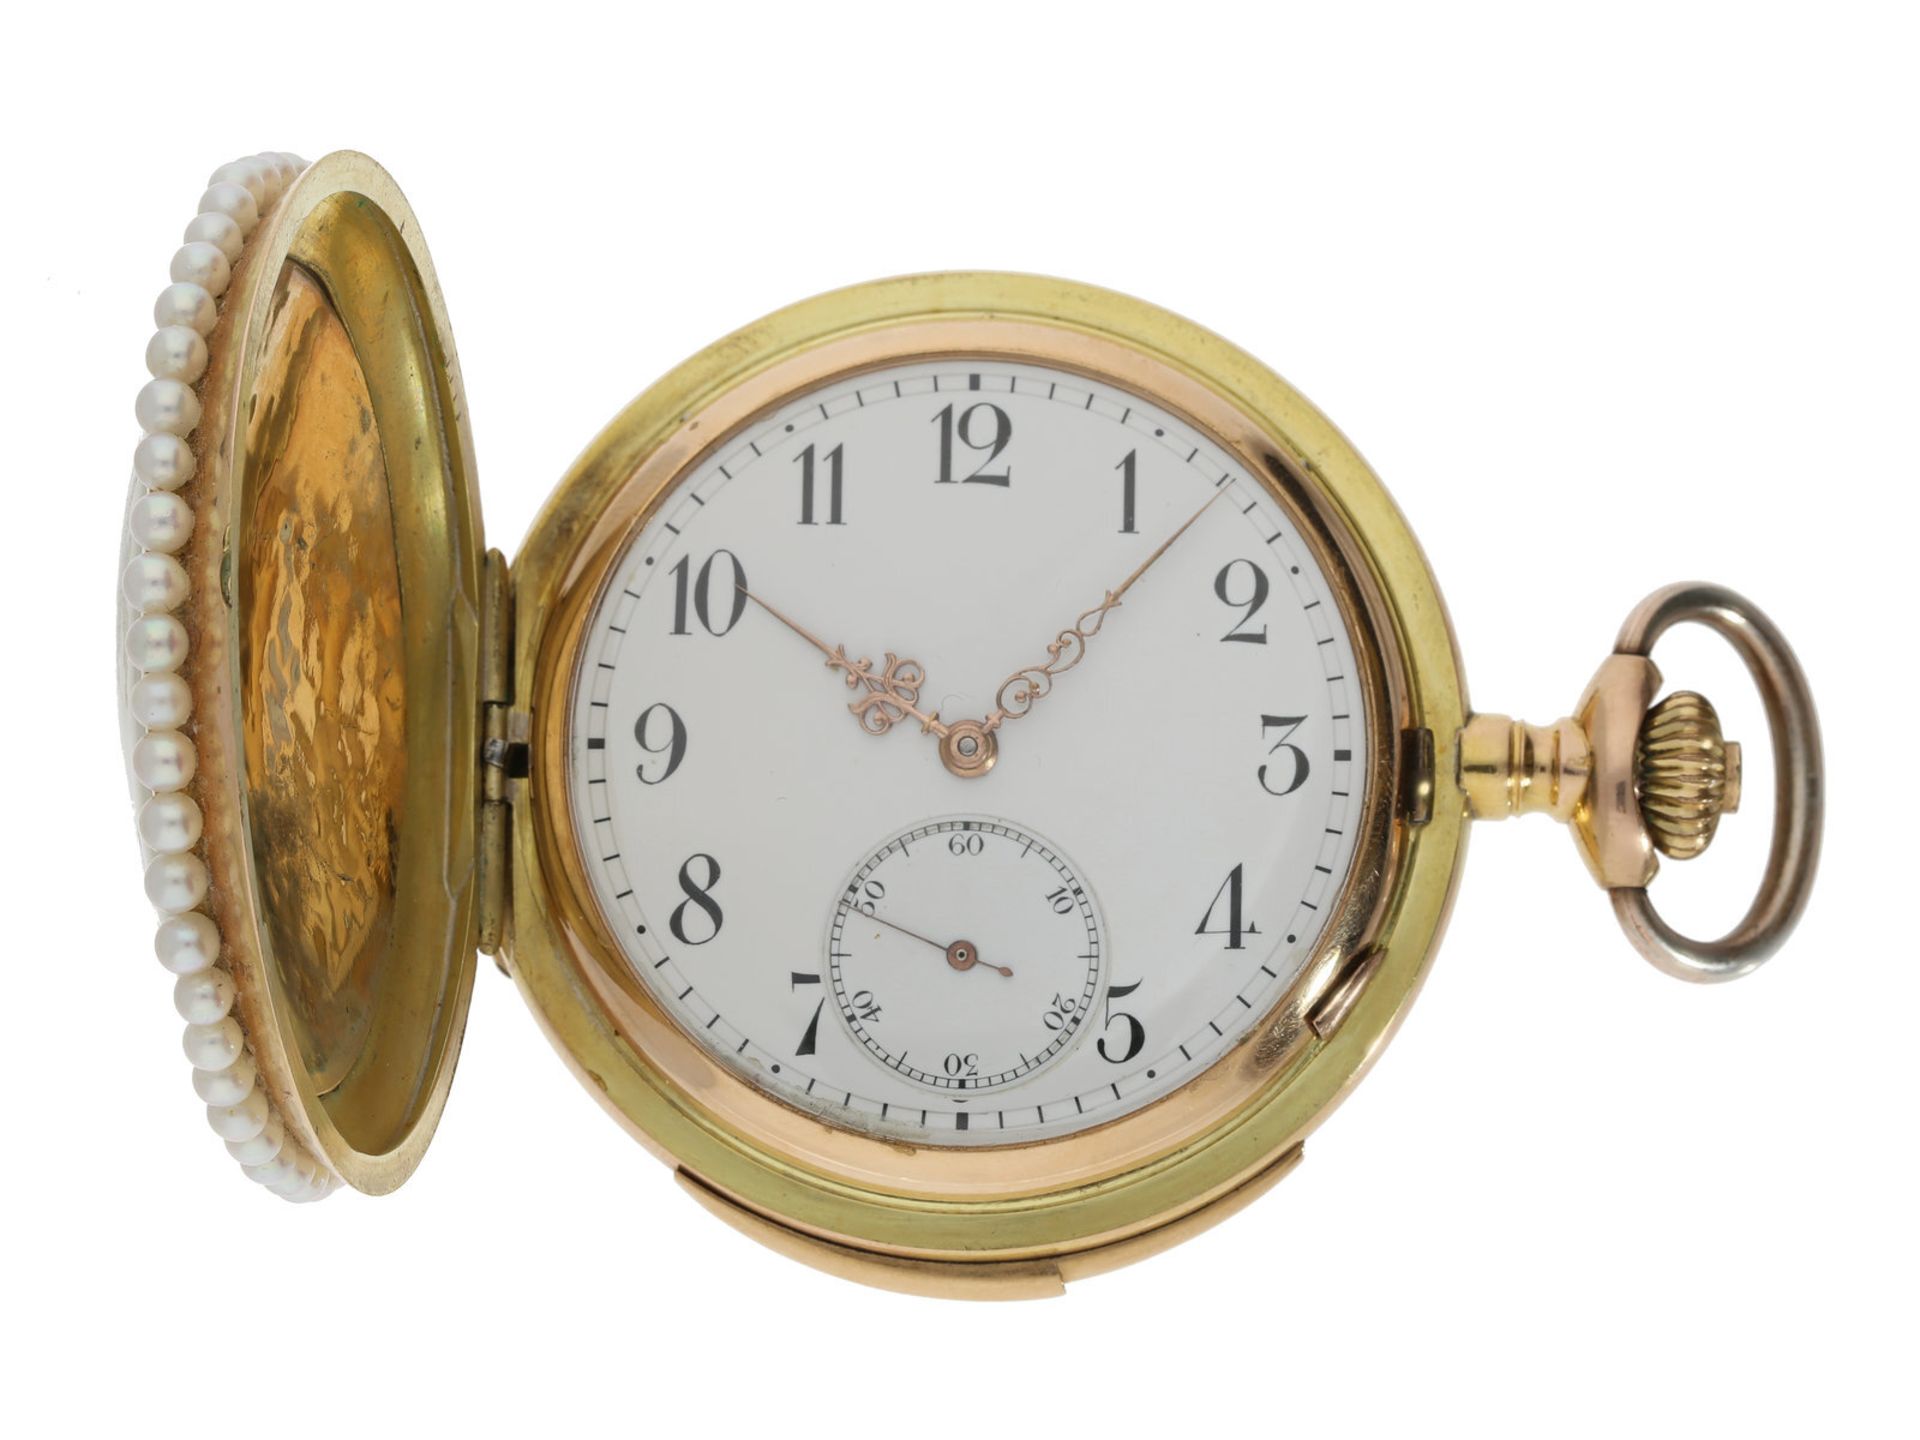 Taschenuhr: Schweizer Goldsavonnette mit Minutenrepetition, seltenes Le Coultre Kaliber, um 1900 - Image 2 of 3